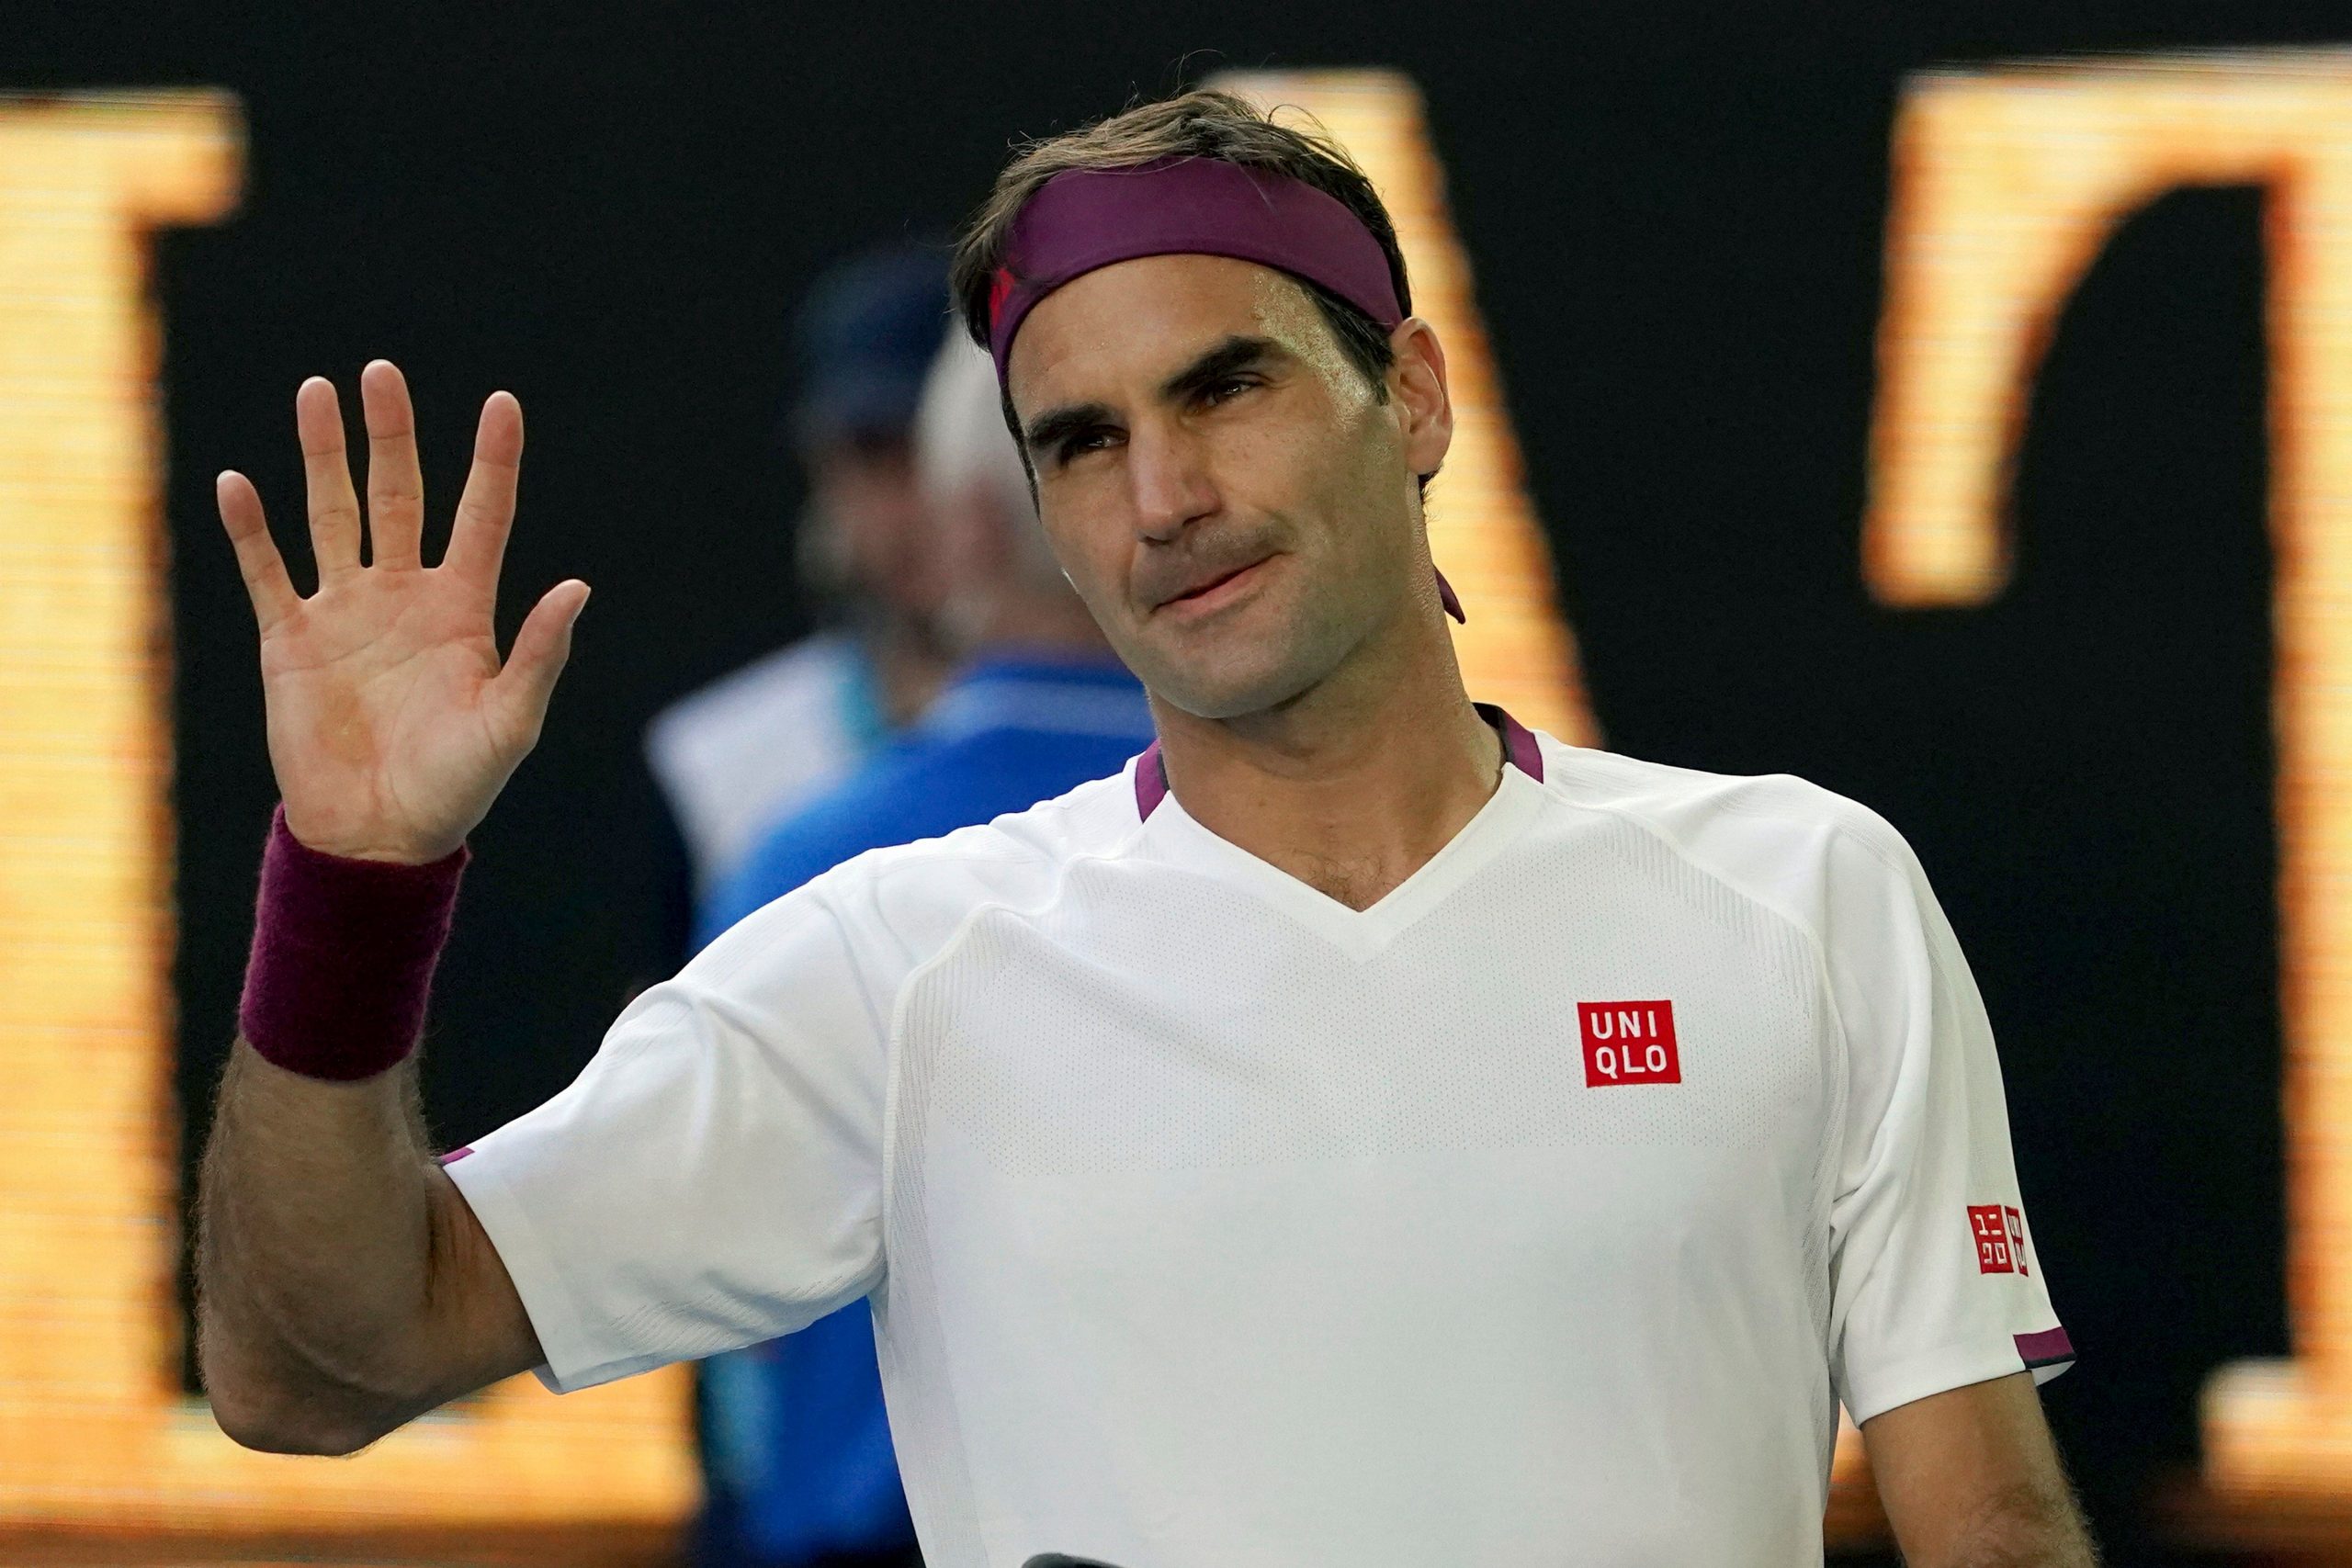 Roger Federer retirement: Career in numbers